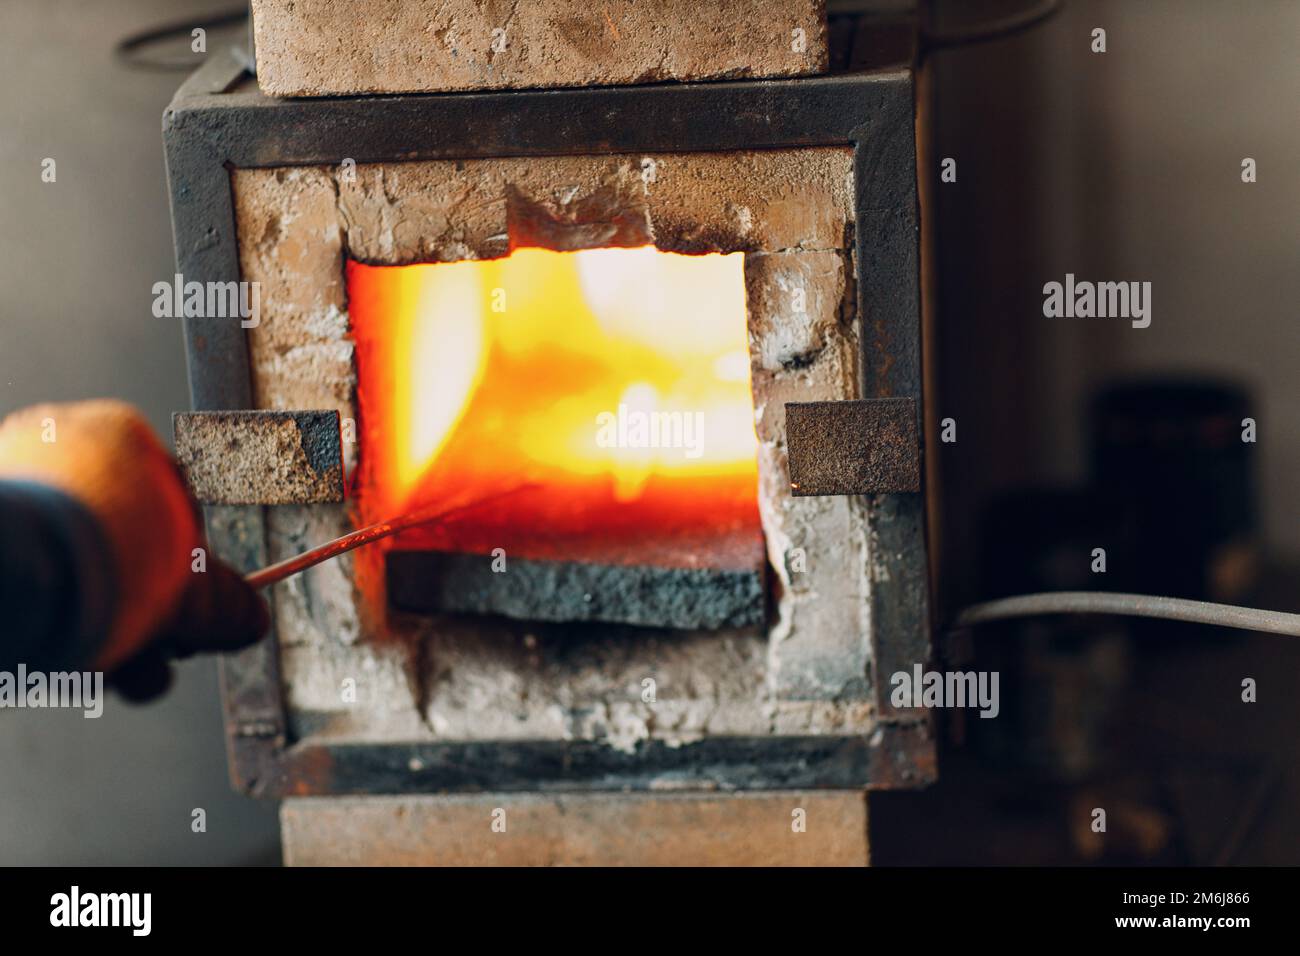 Horno de forja fotografías e imágenes de alta resolución - Alamy